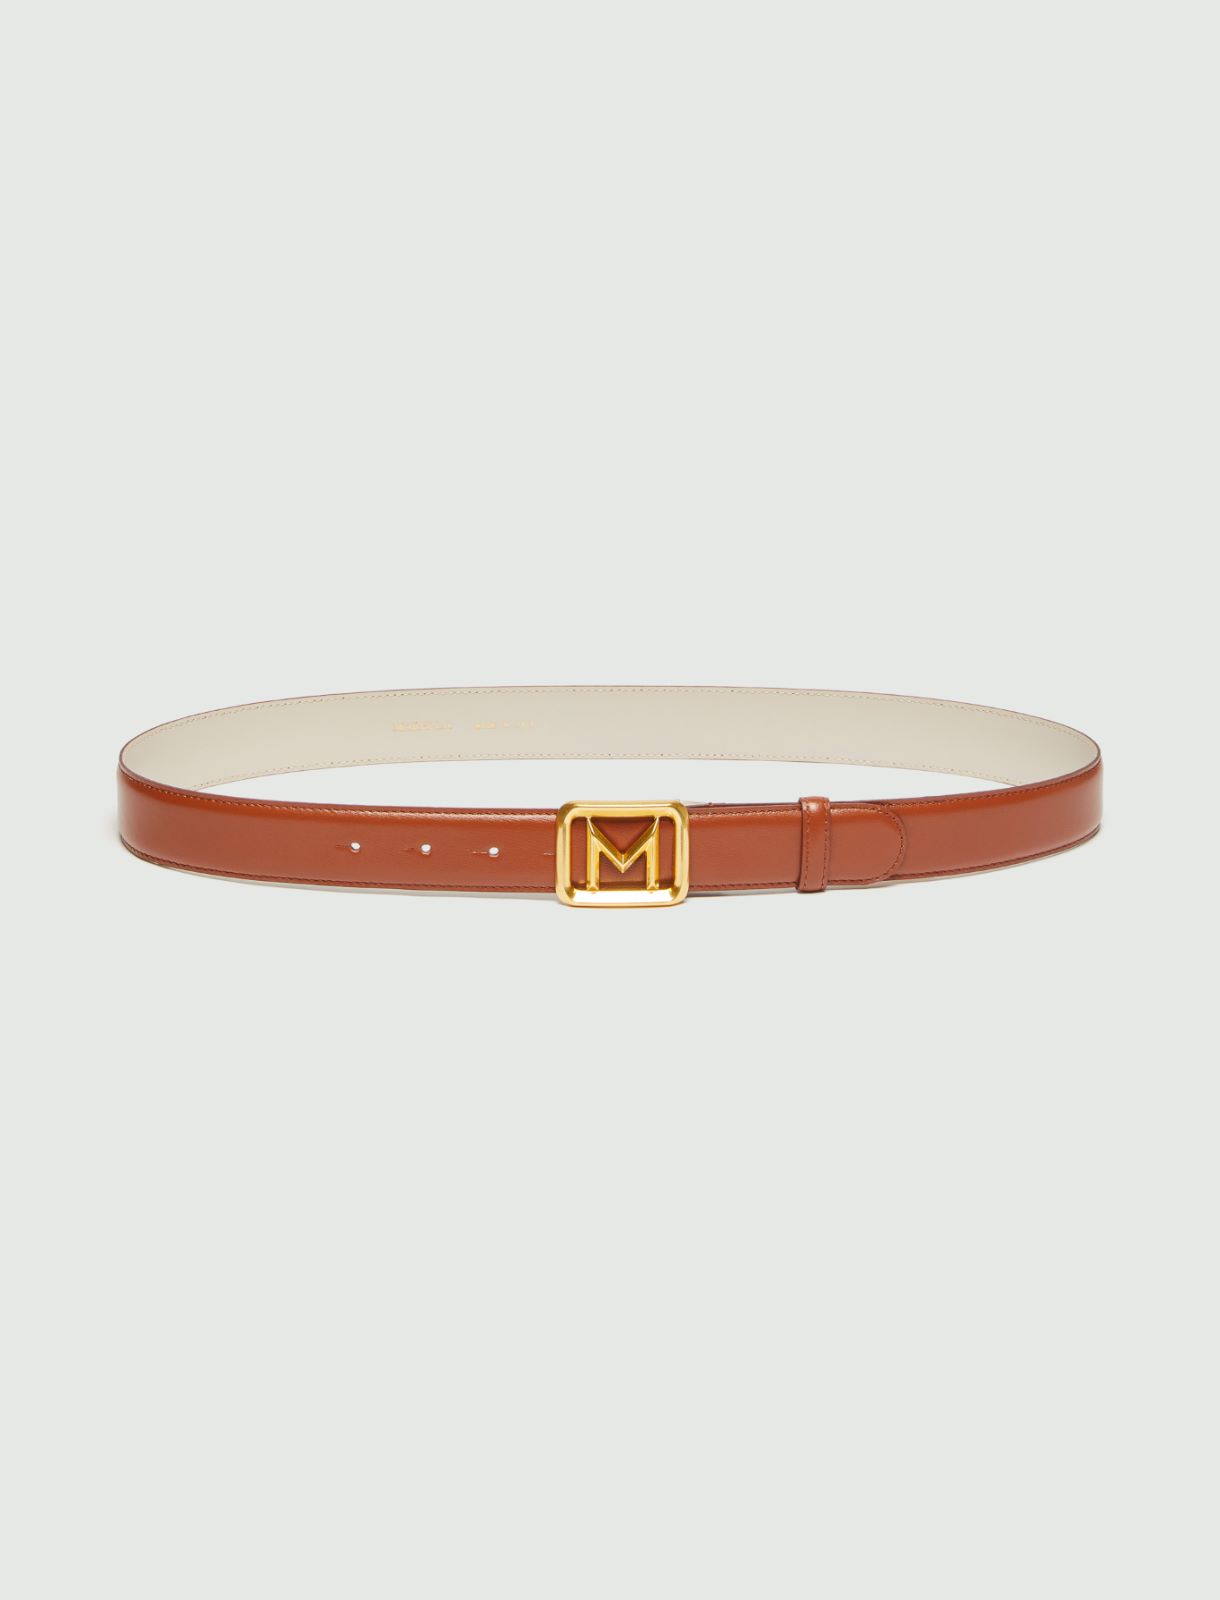 Leather belt, tobacco | Marella